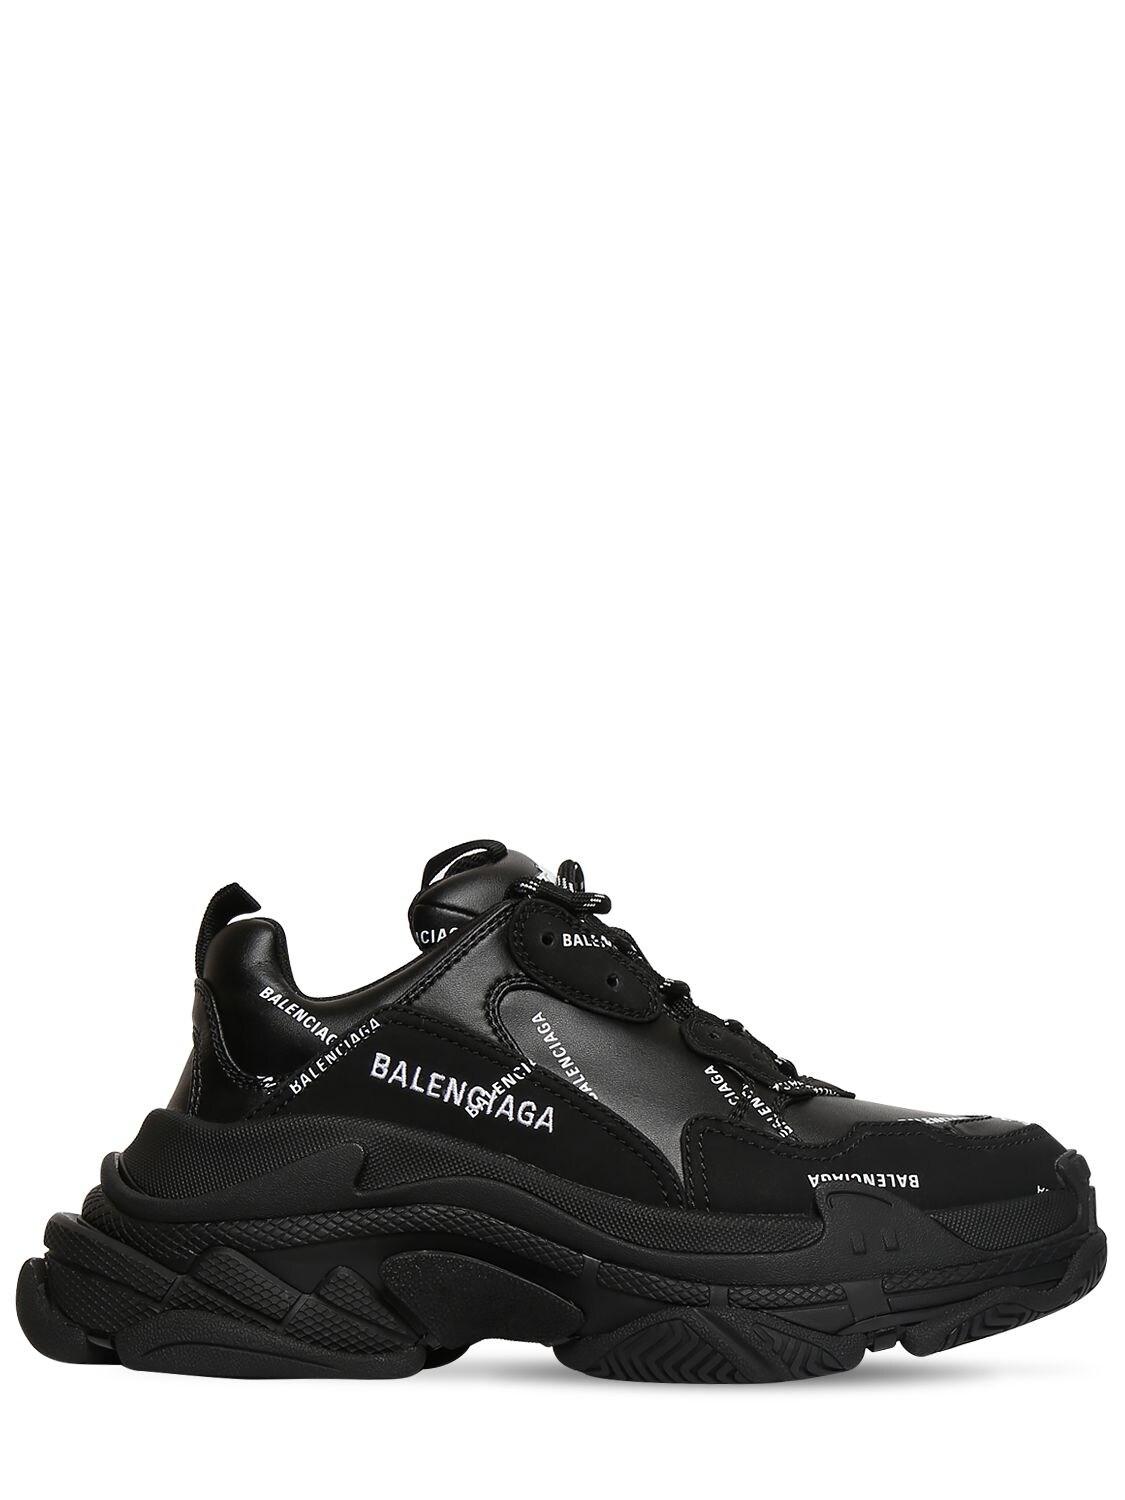 Balenciaga 'triple S' Sneakers in Black | Lyst